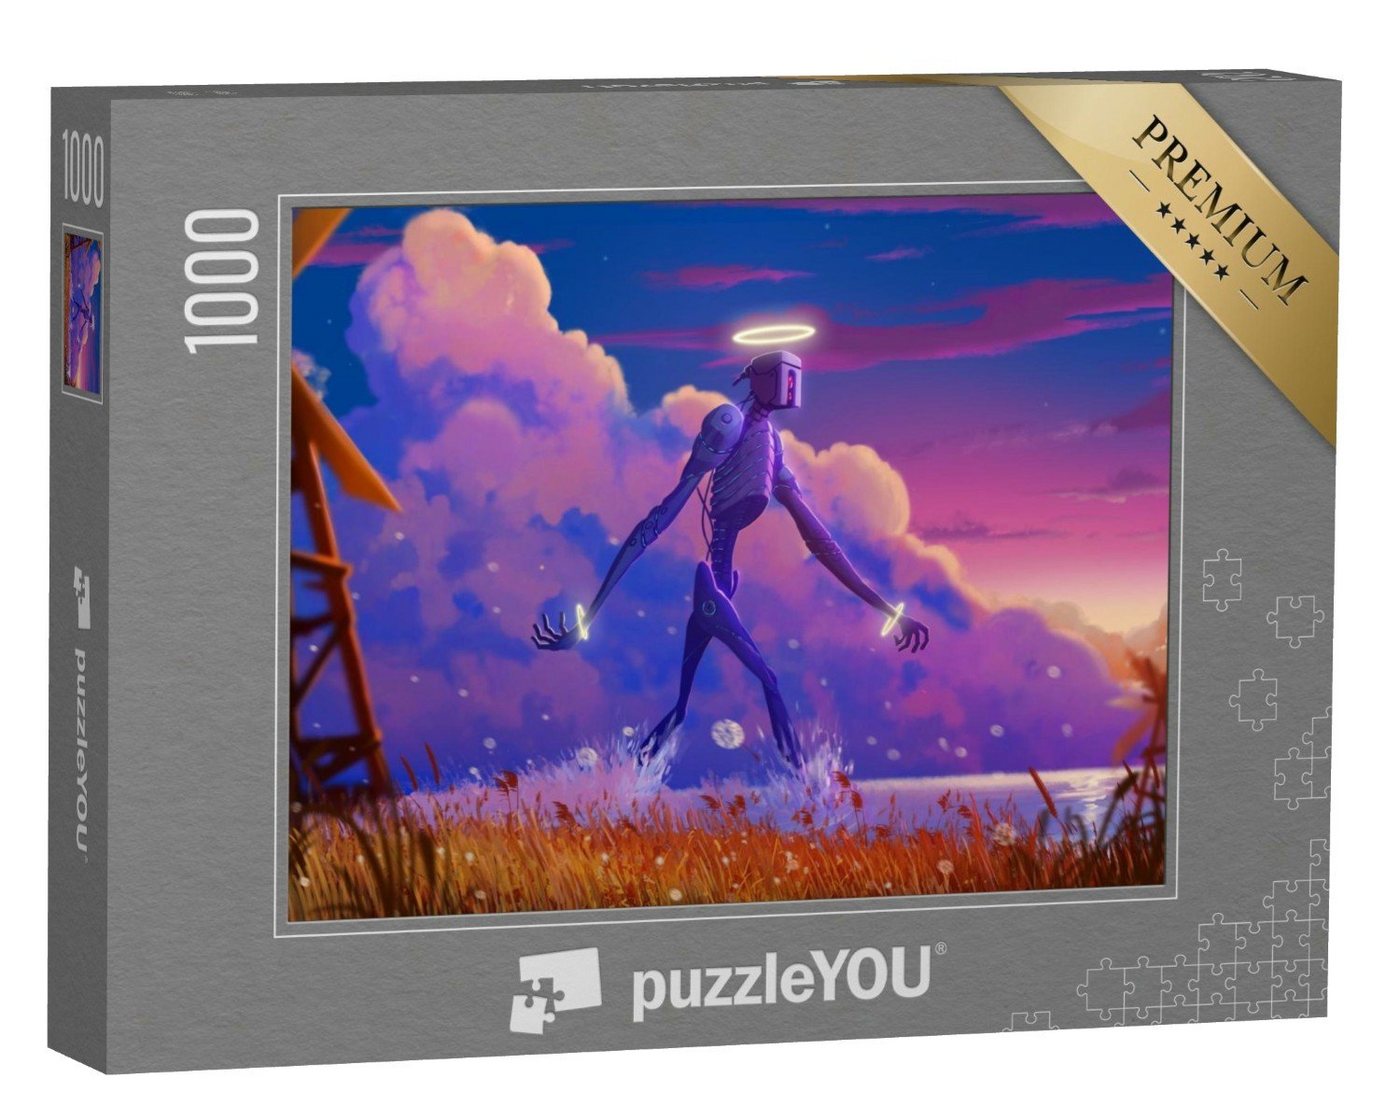 puzzleYOU Puzzle Digitale Kunst: The Giant Mystery Robot Walking, 1000 Puzzleteile, puzzleYOU-Kollektionen Illustrationen von puzzleYOU